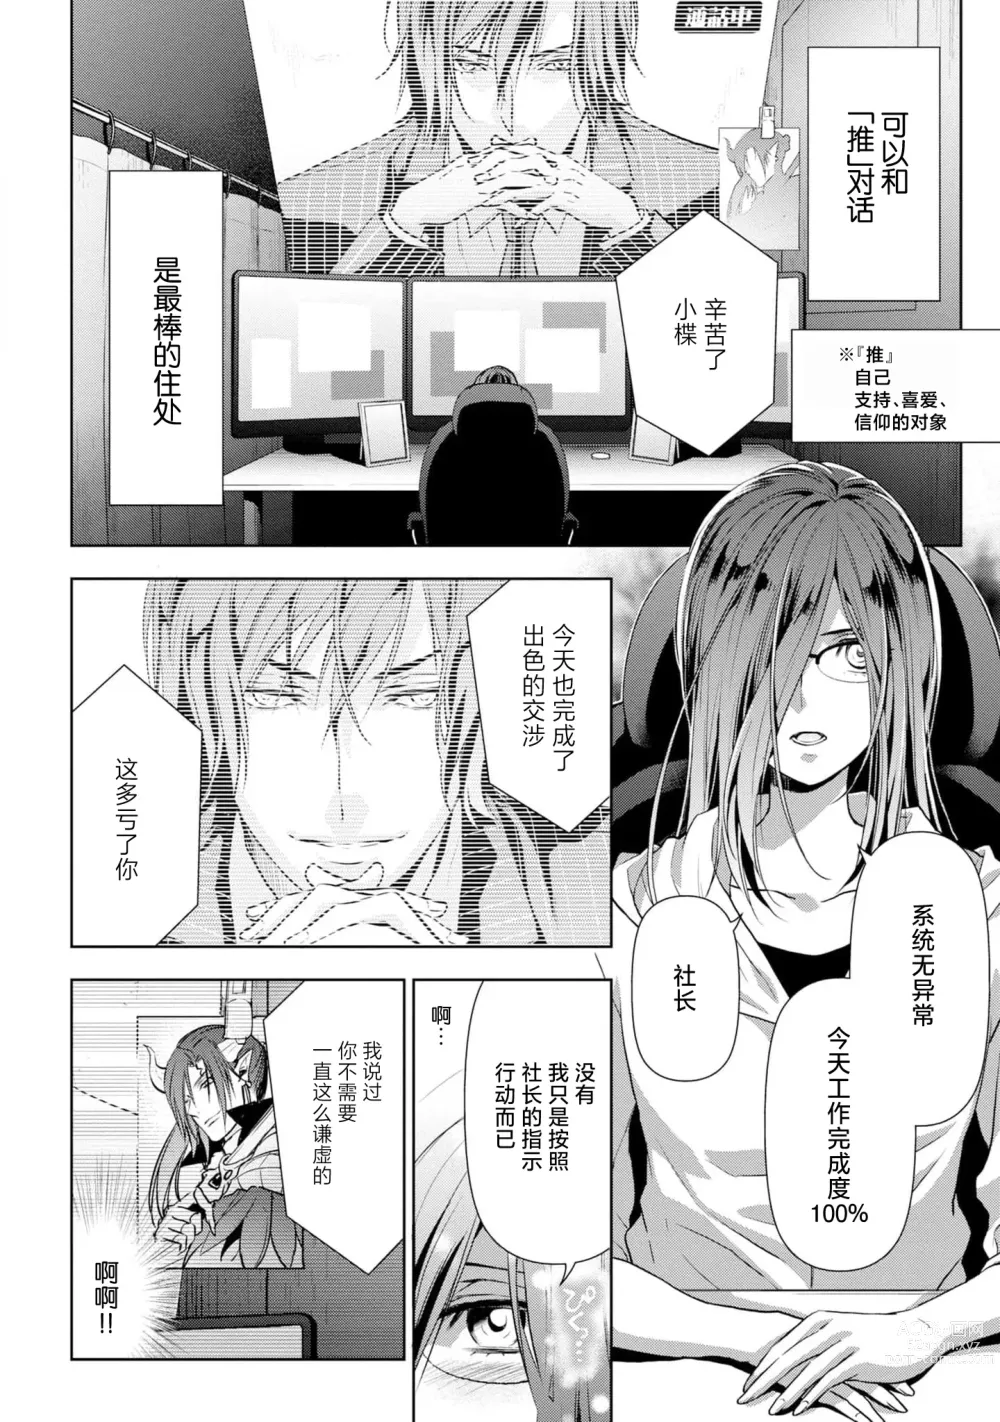 Page 11 of manga 消极小姐和乐观先生~触摸上司的那个并进行反击!?~ 1-5 + Extra